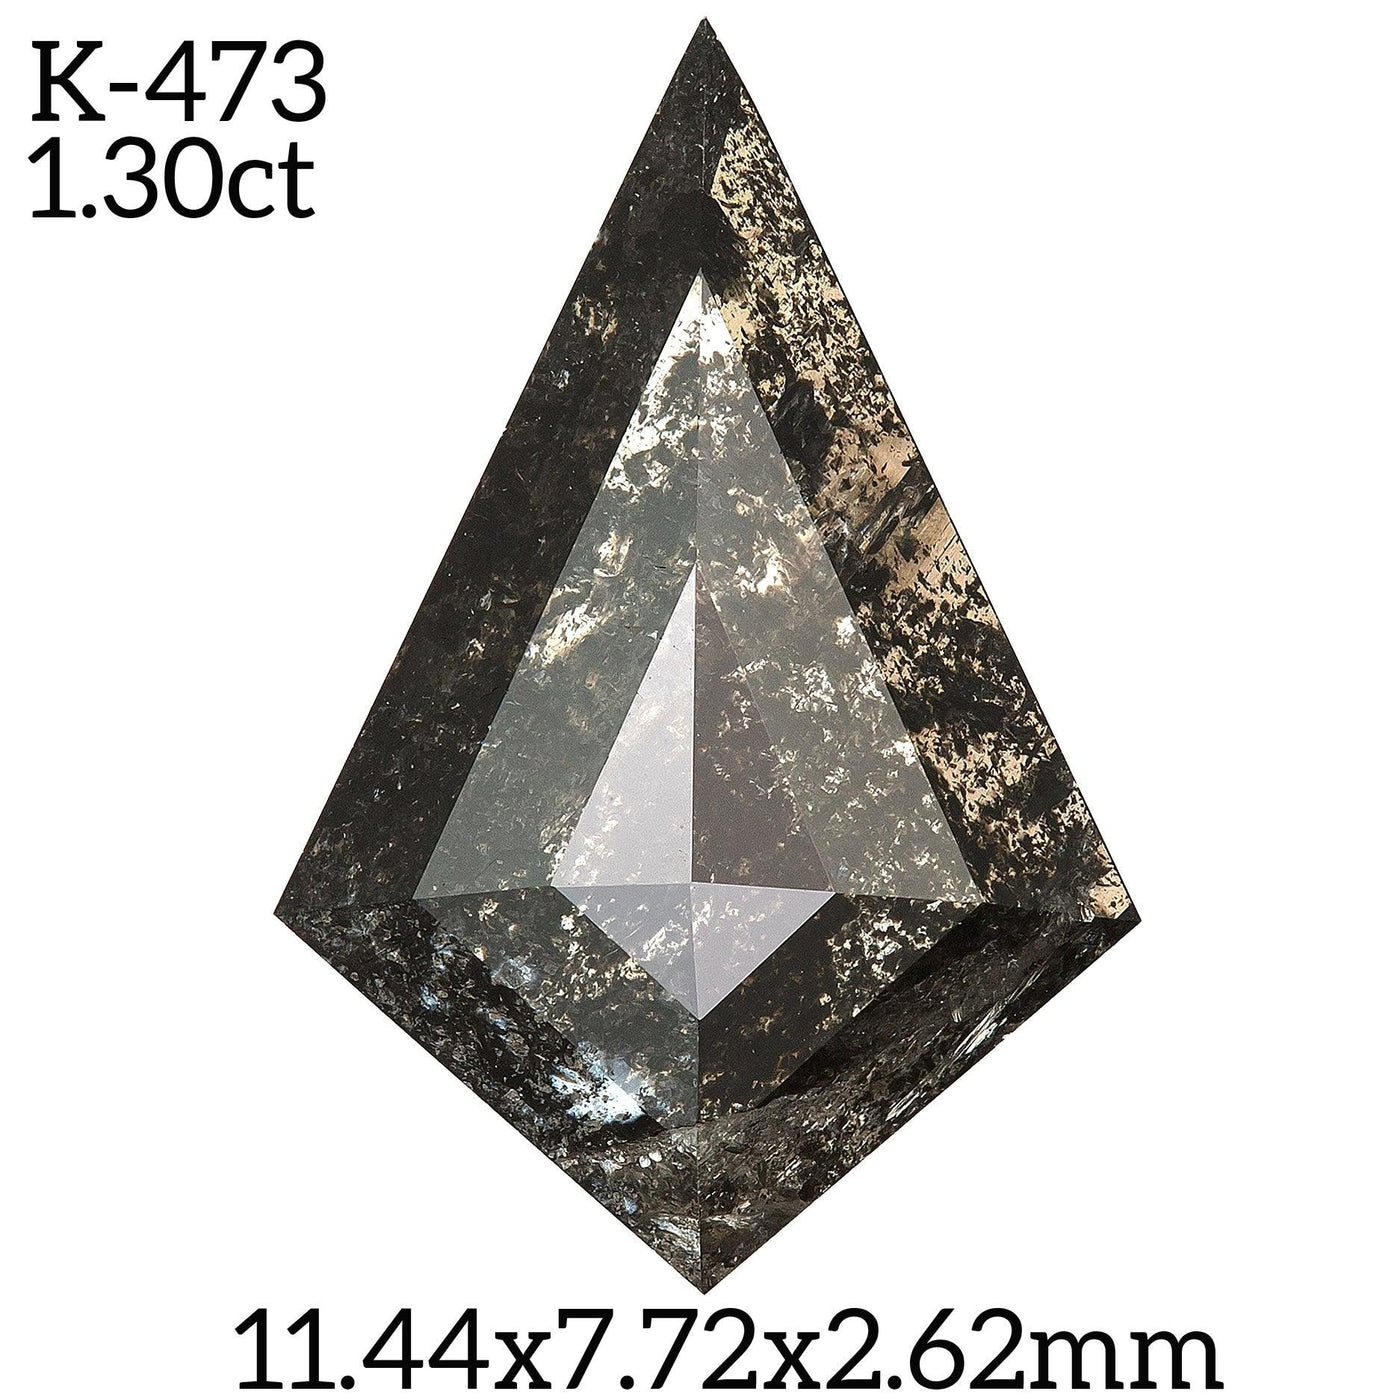 K473 - Salt and pepper kite diamond - Rubysta